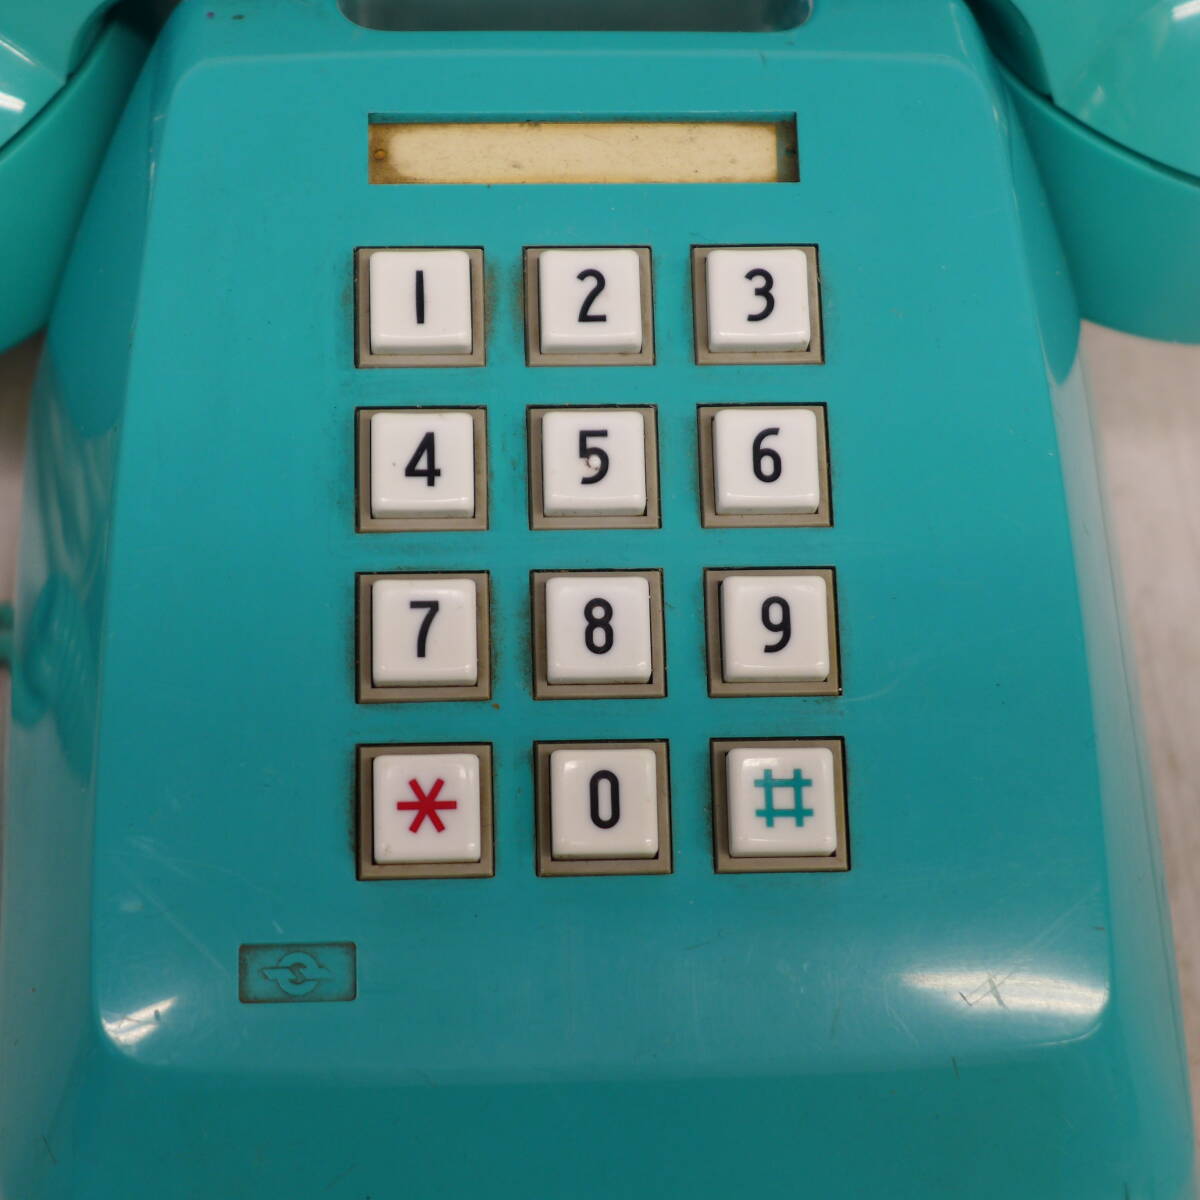 dd1181● 【動作可】日本電電公社 押しボタン式電話機 601-P 昭和レトロ 固定電話 電話機 アナログ プッシュフォン モジュラー仕様/80の画像4